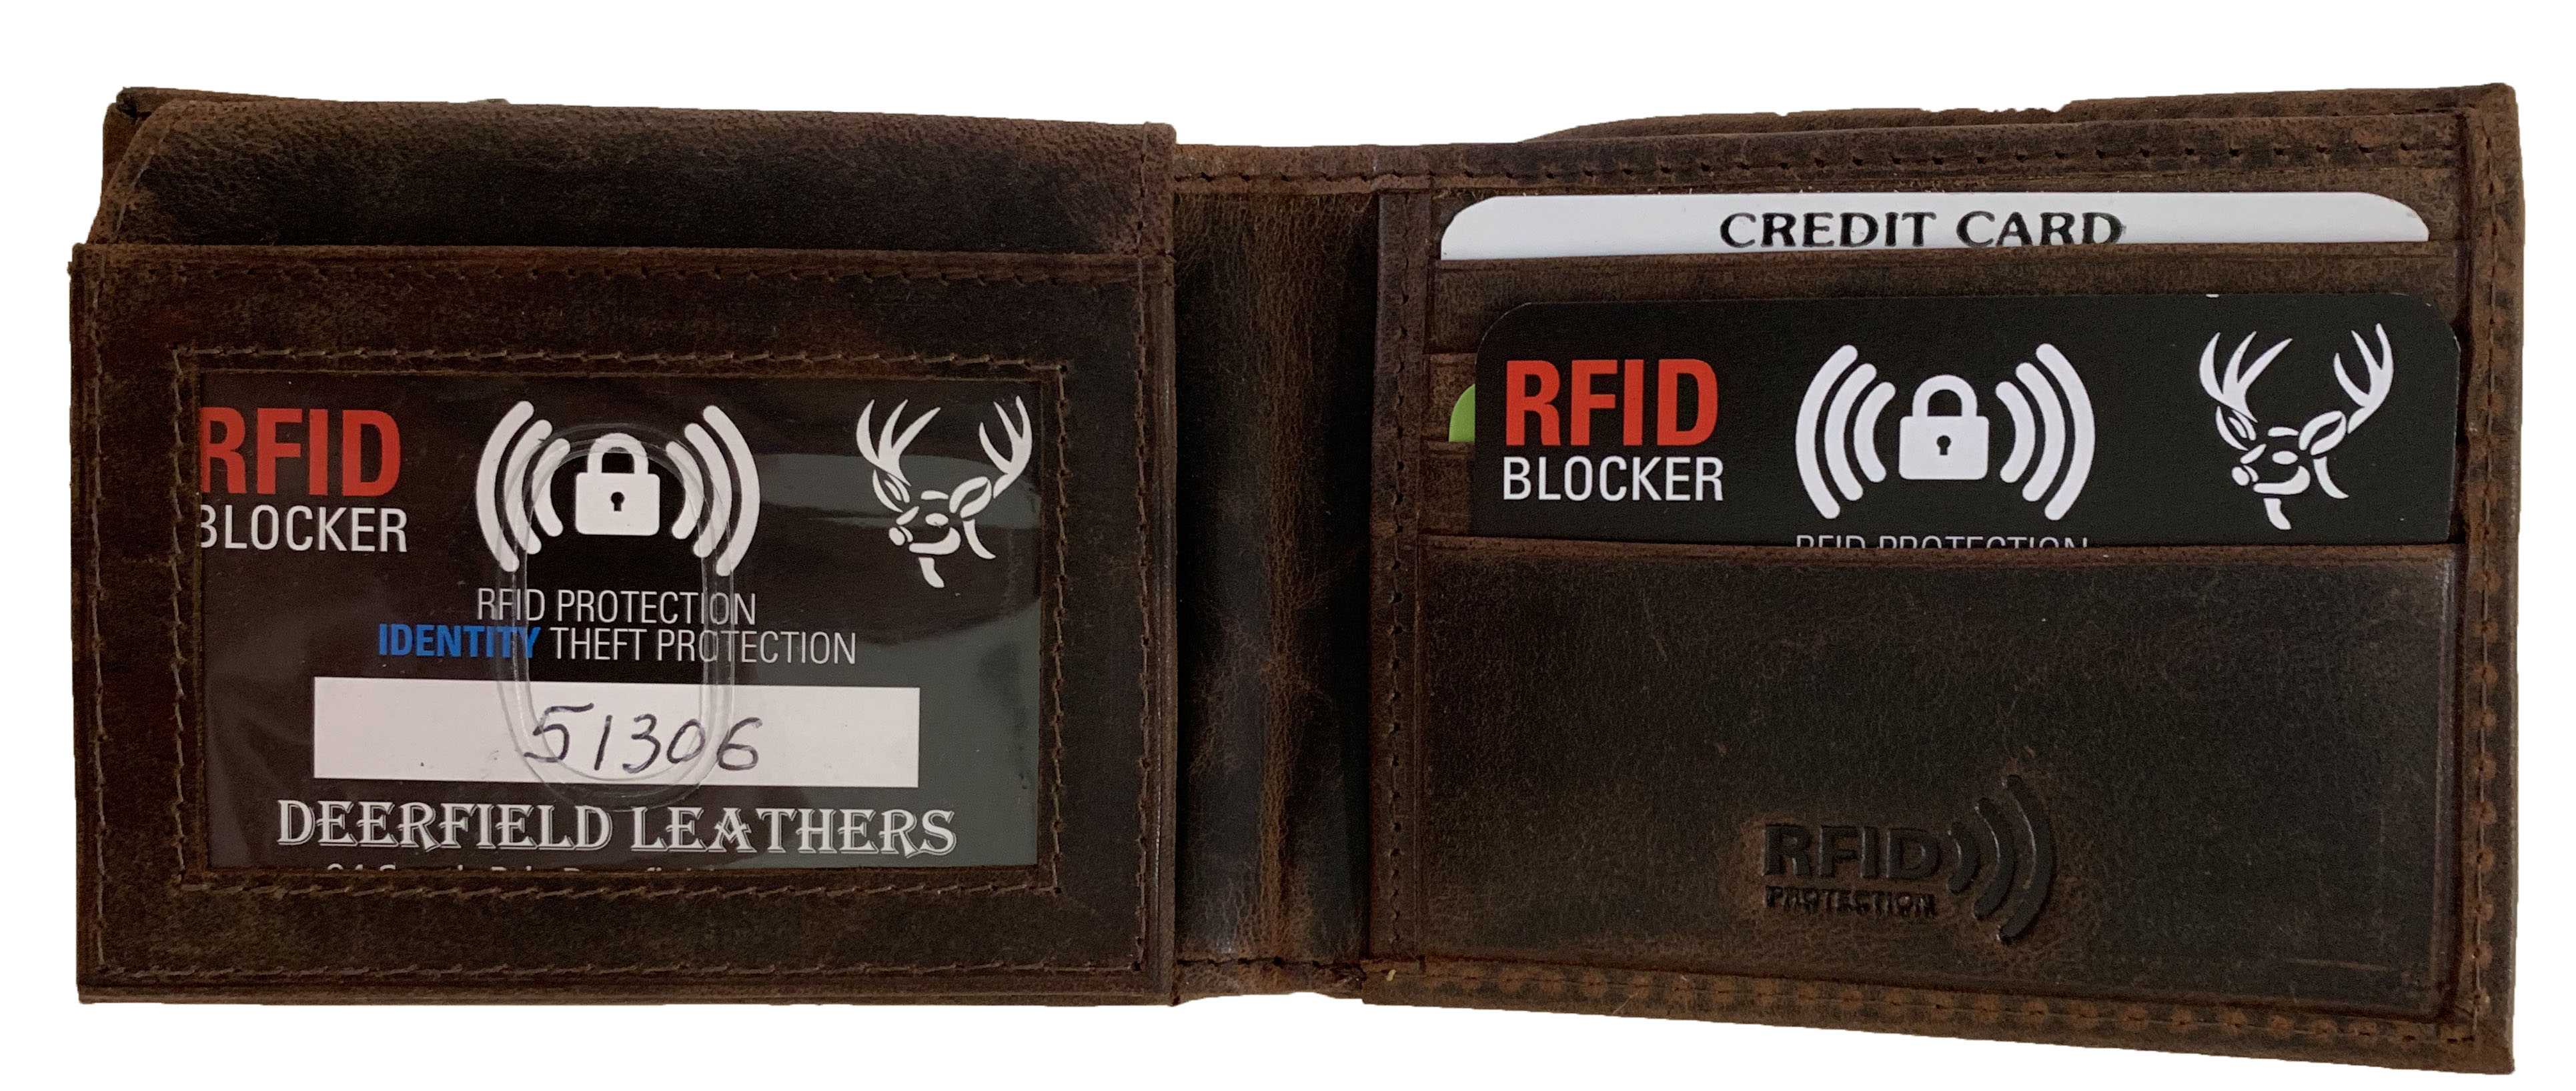 Genuine Leather Long Wallet - Medium Brown Crazy Horse - Ox & Birch